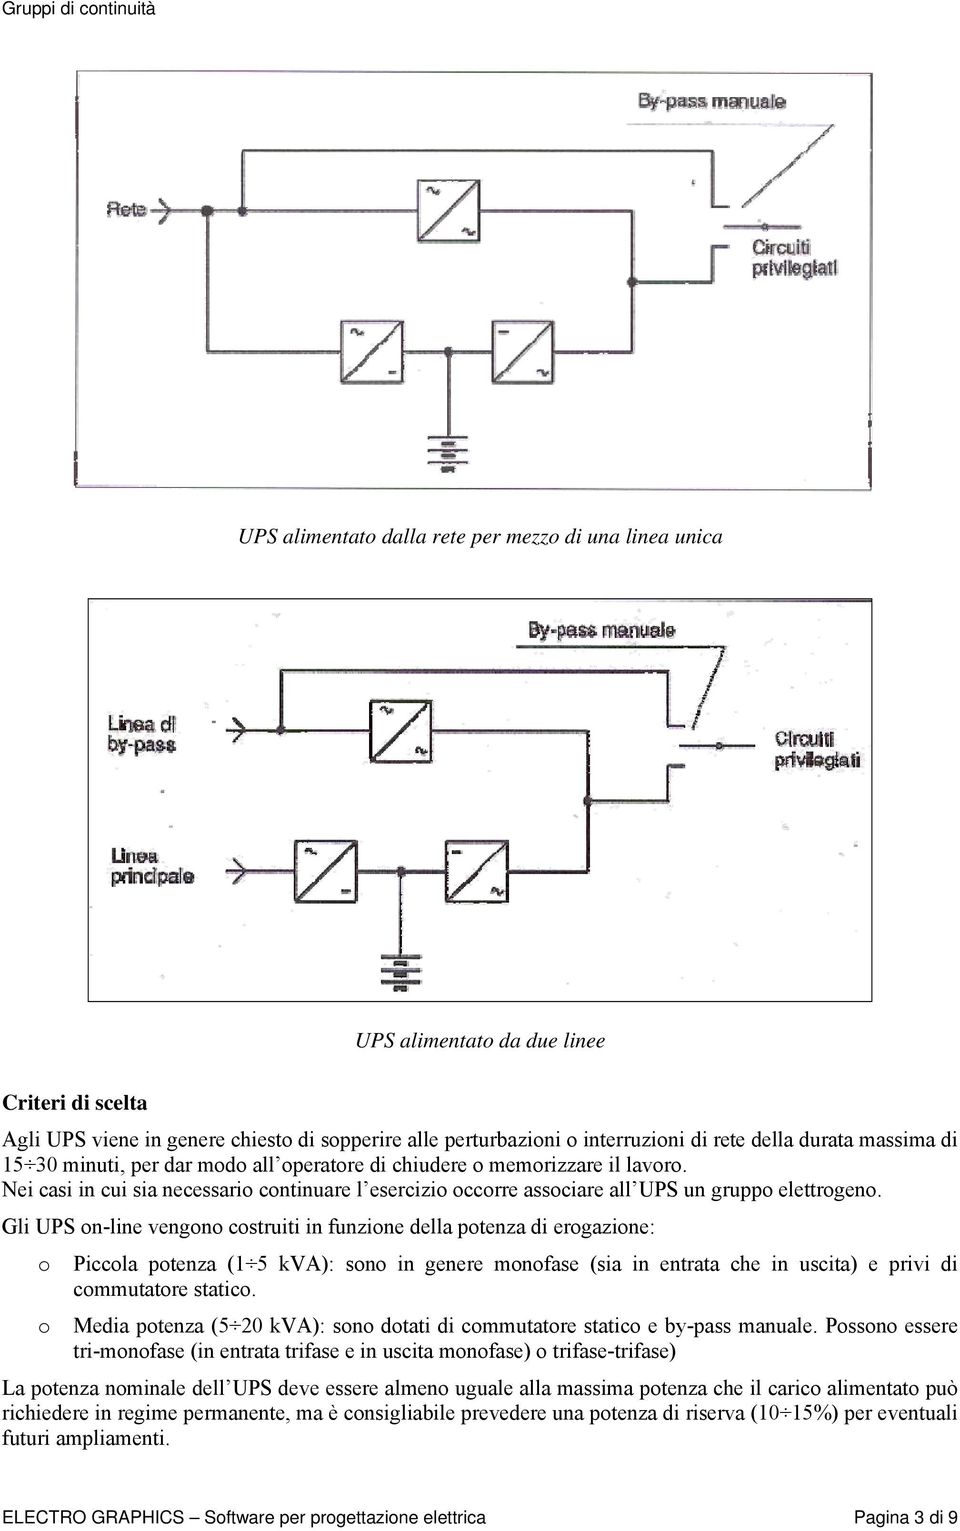 Gli UPS n-line vengn cstruiti in funzine della ptenza di ergazine: Piccla ptenza (1 5 kva): sn in genere mnfase (sia in entrata che in uscita) e privi di cmmutatre static.